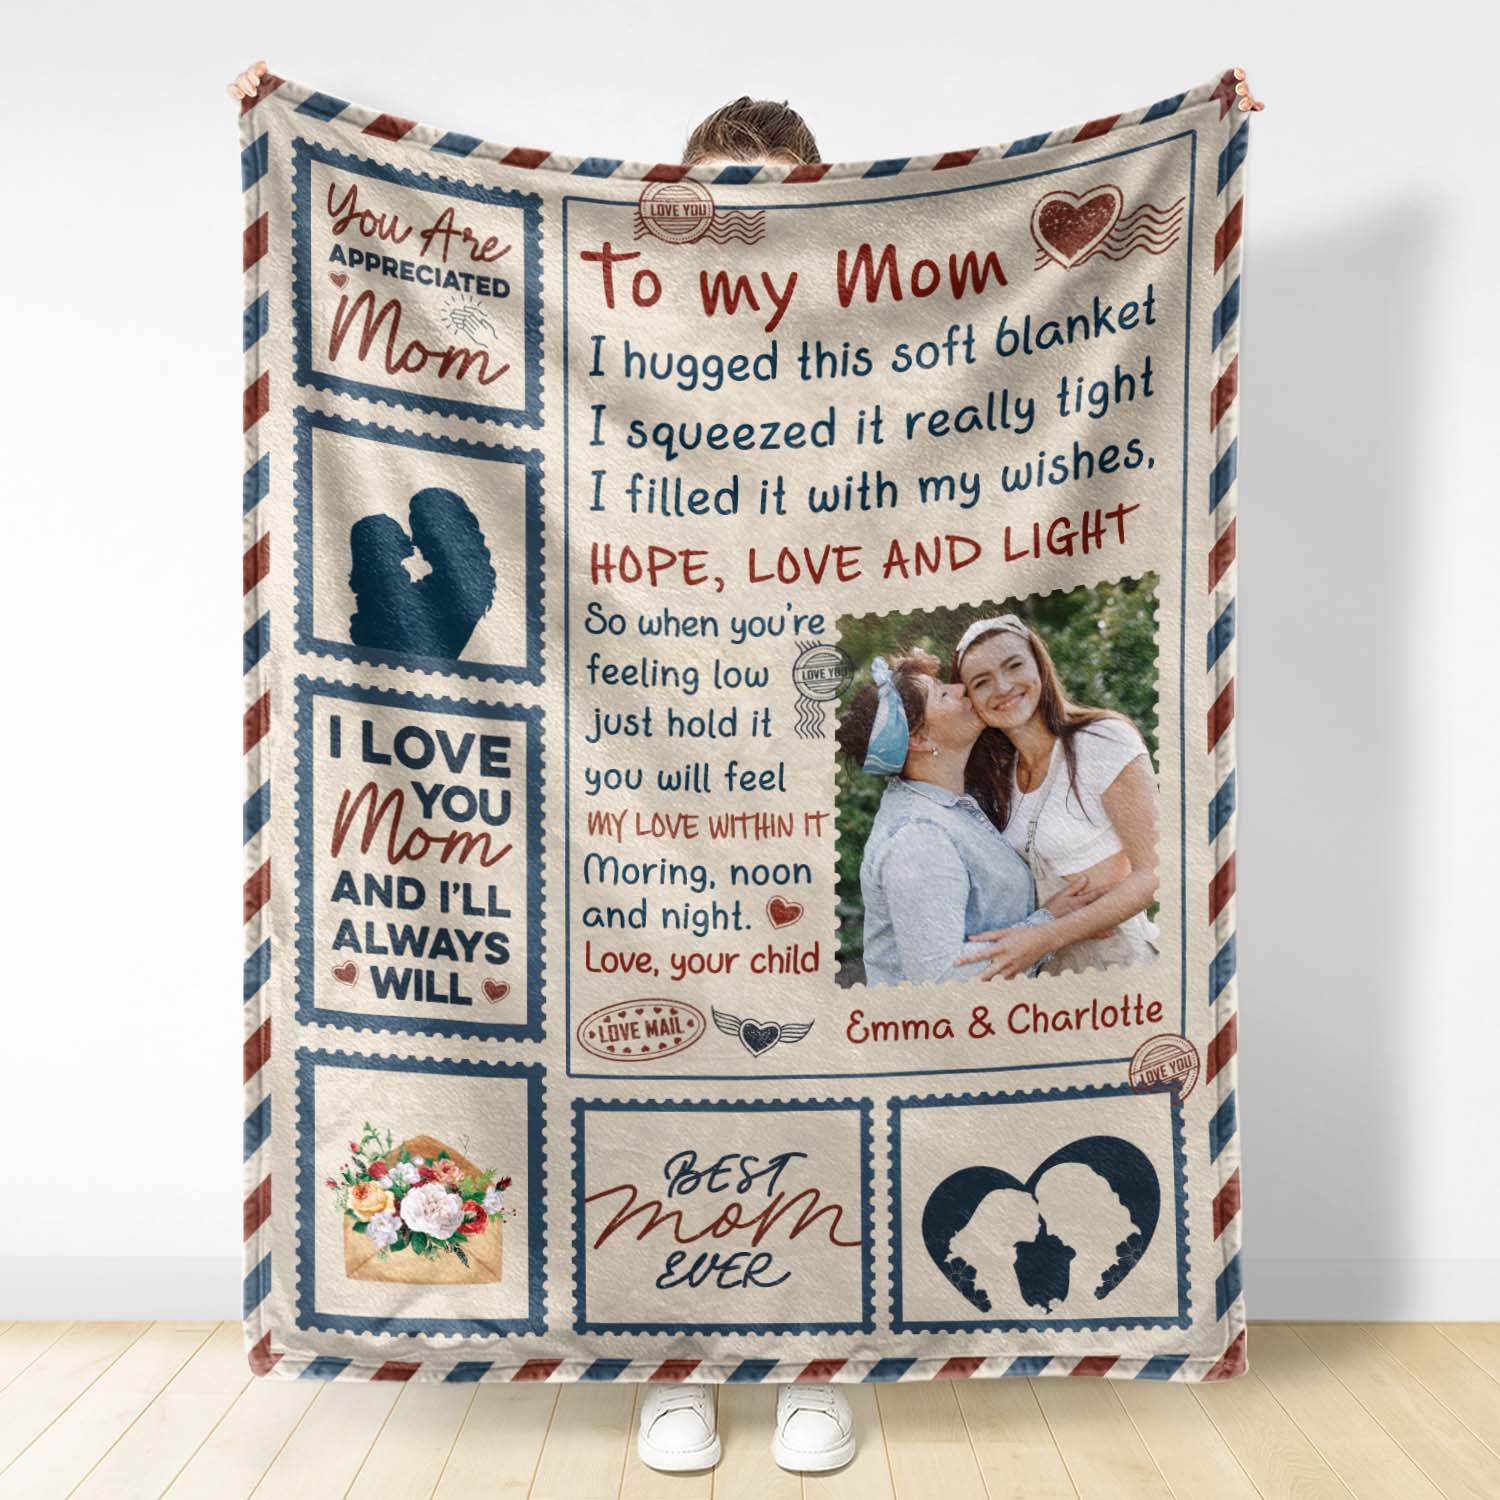 Custom Photo I Love You Mom And I'll Always Will - Loving, Birthday Gift For Mother, Mom - Personalized Custom Fleece Blanket